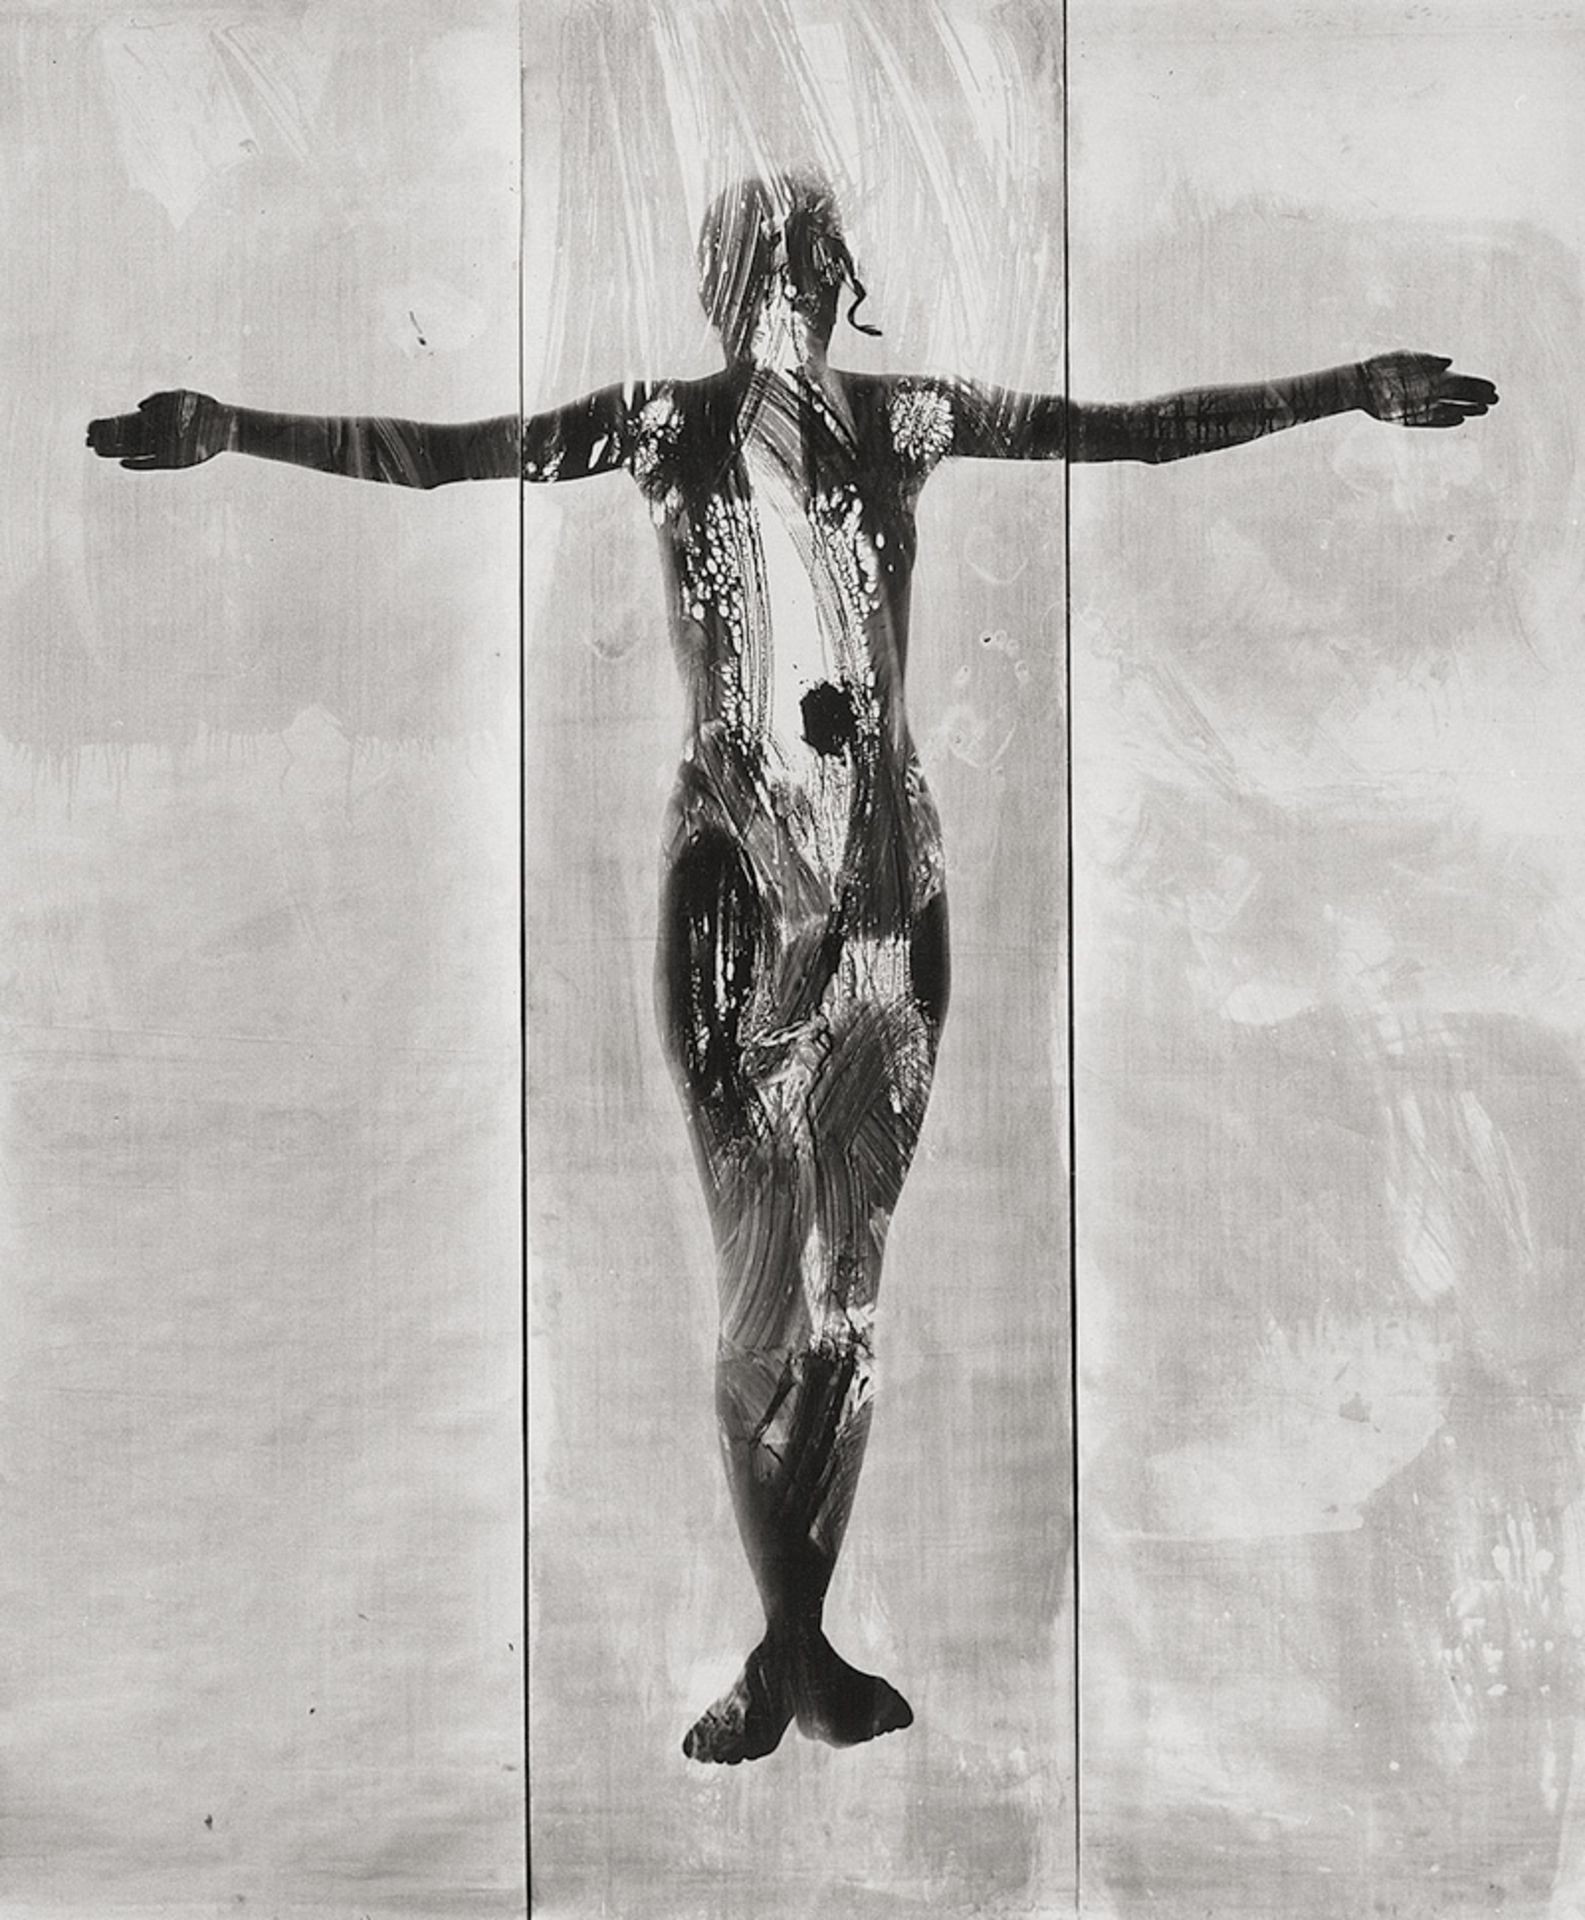 Neusüss, Floris M.: Full body silhouettes - Image 3 of 3